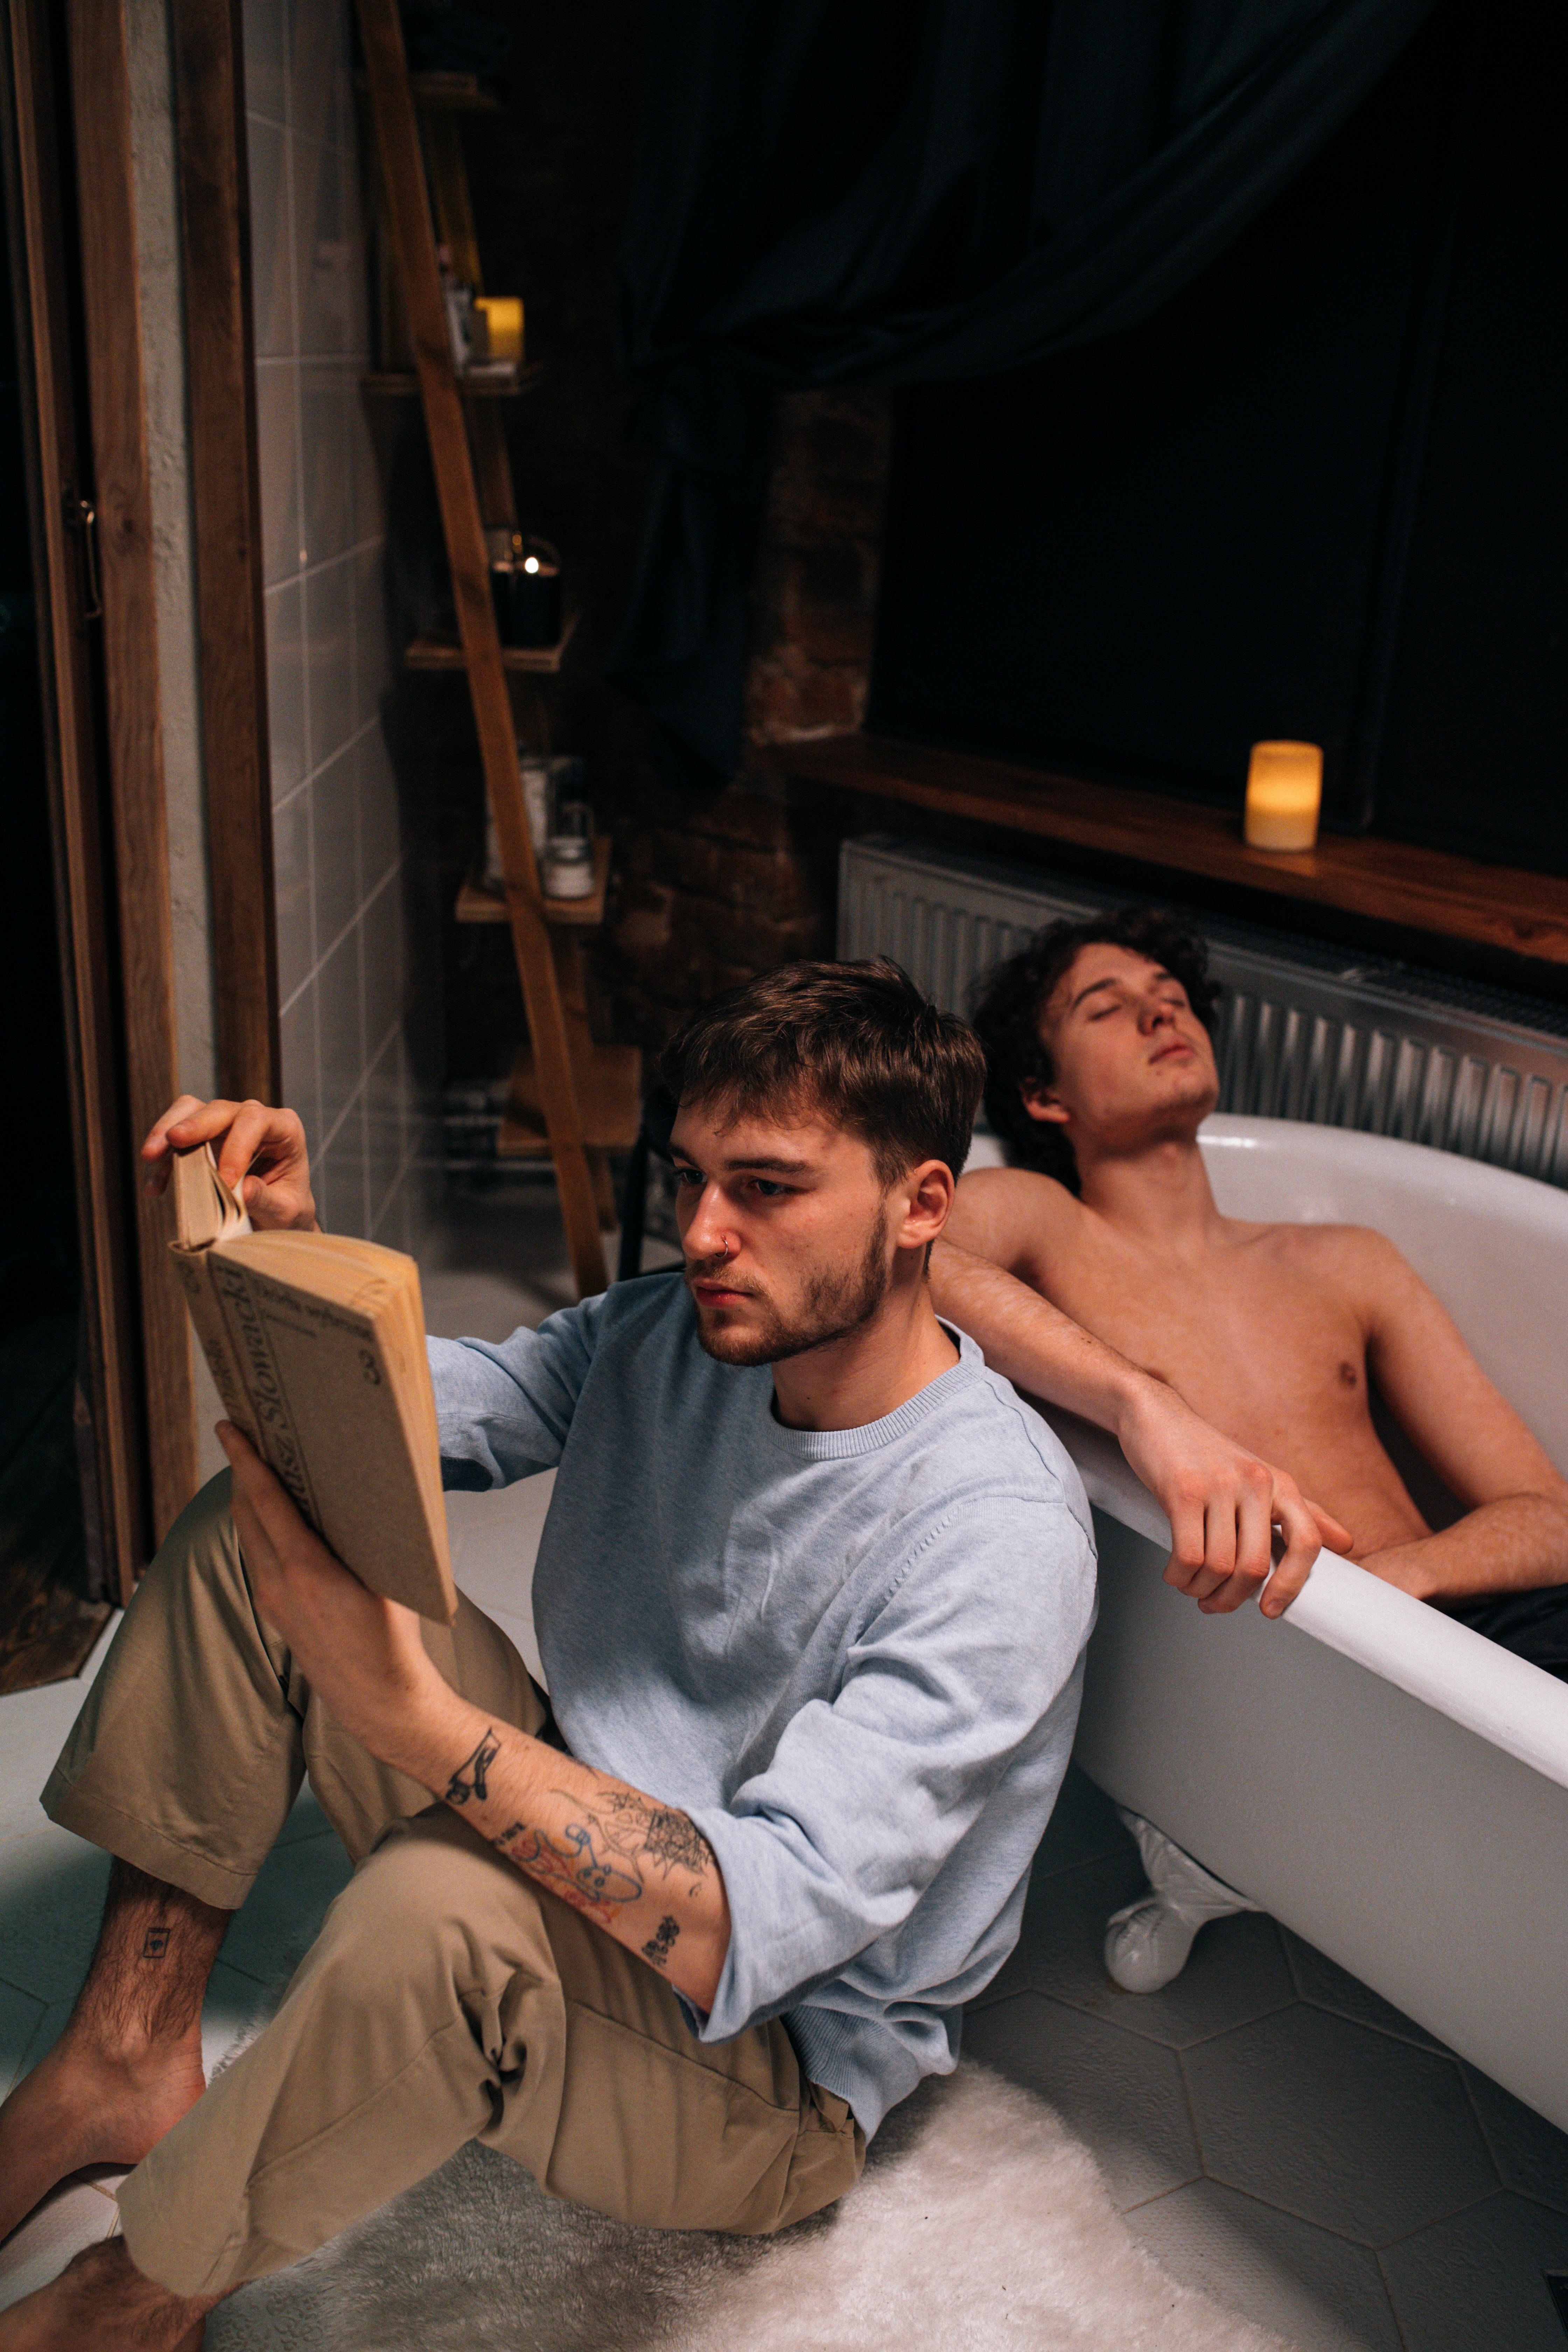 man in gray sweatshirt reading a book near a man taking a bath